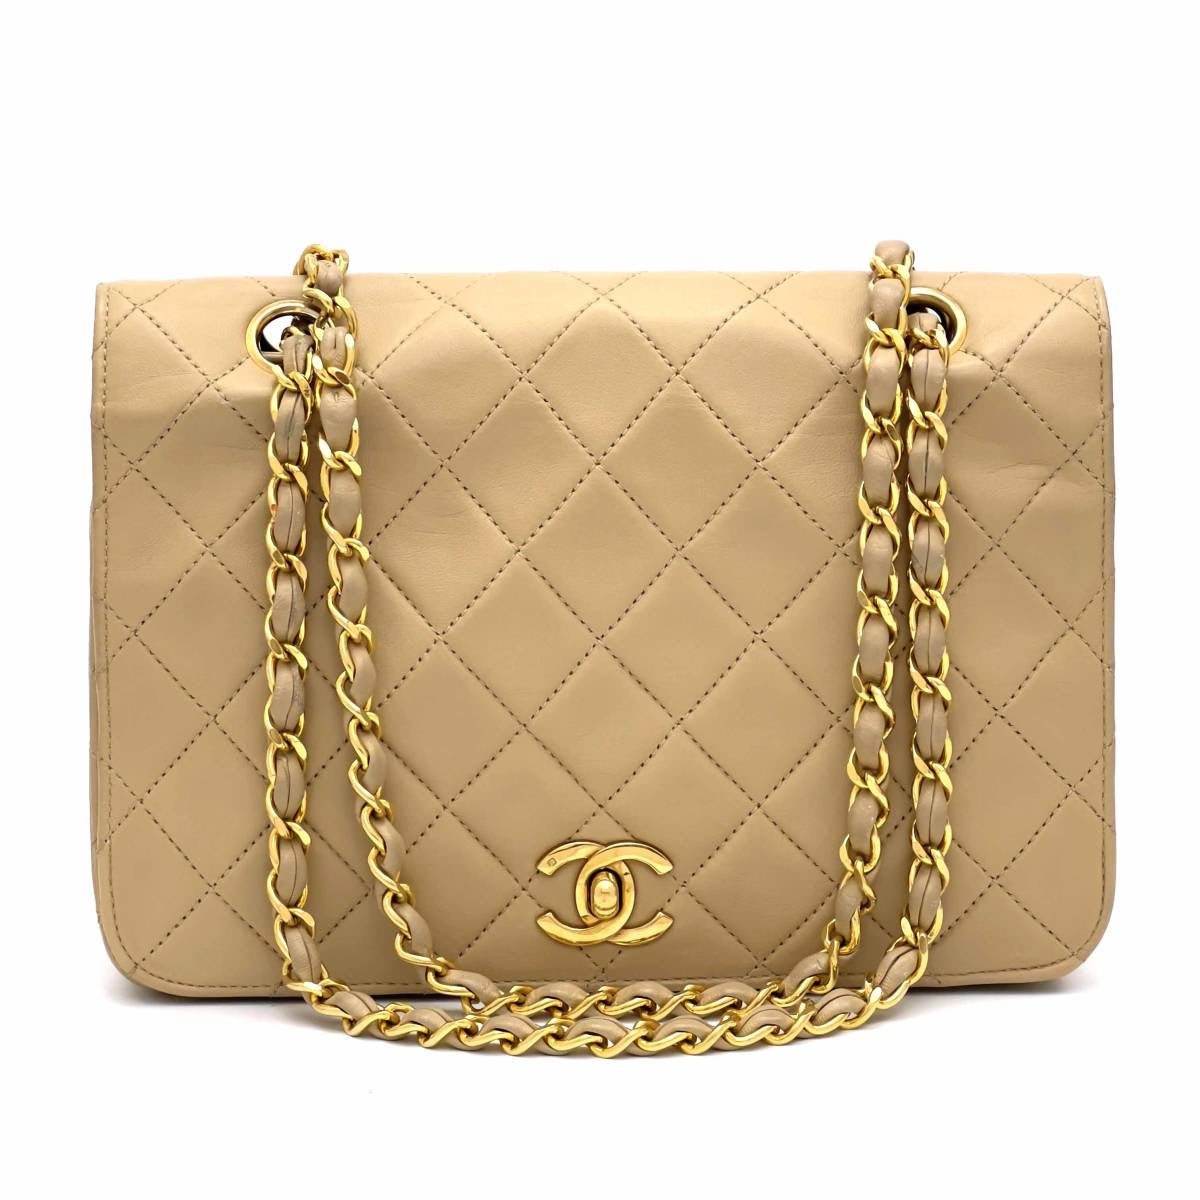 vintage chanel bag  Chanel bag, Chanel classic flap bag, Chanel classic  flap beige